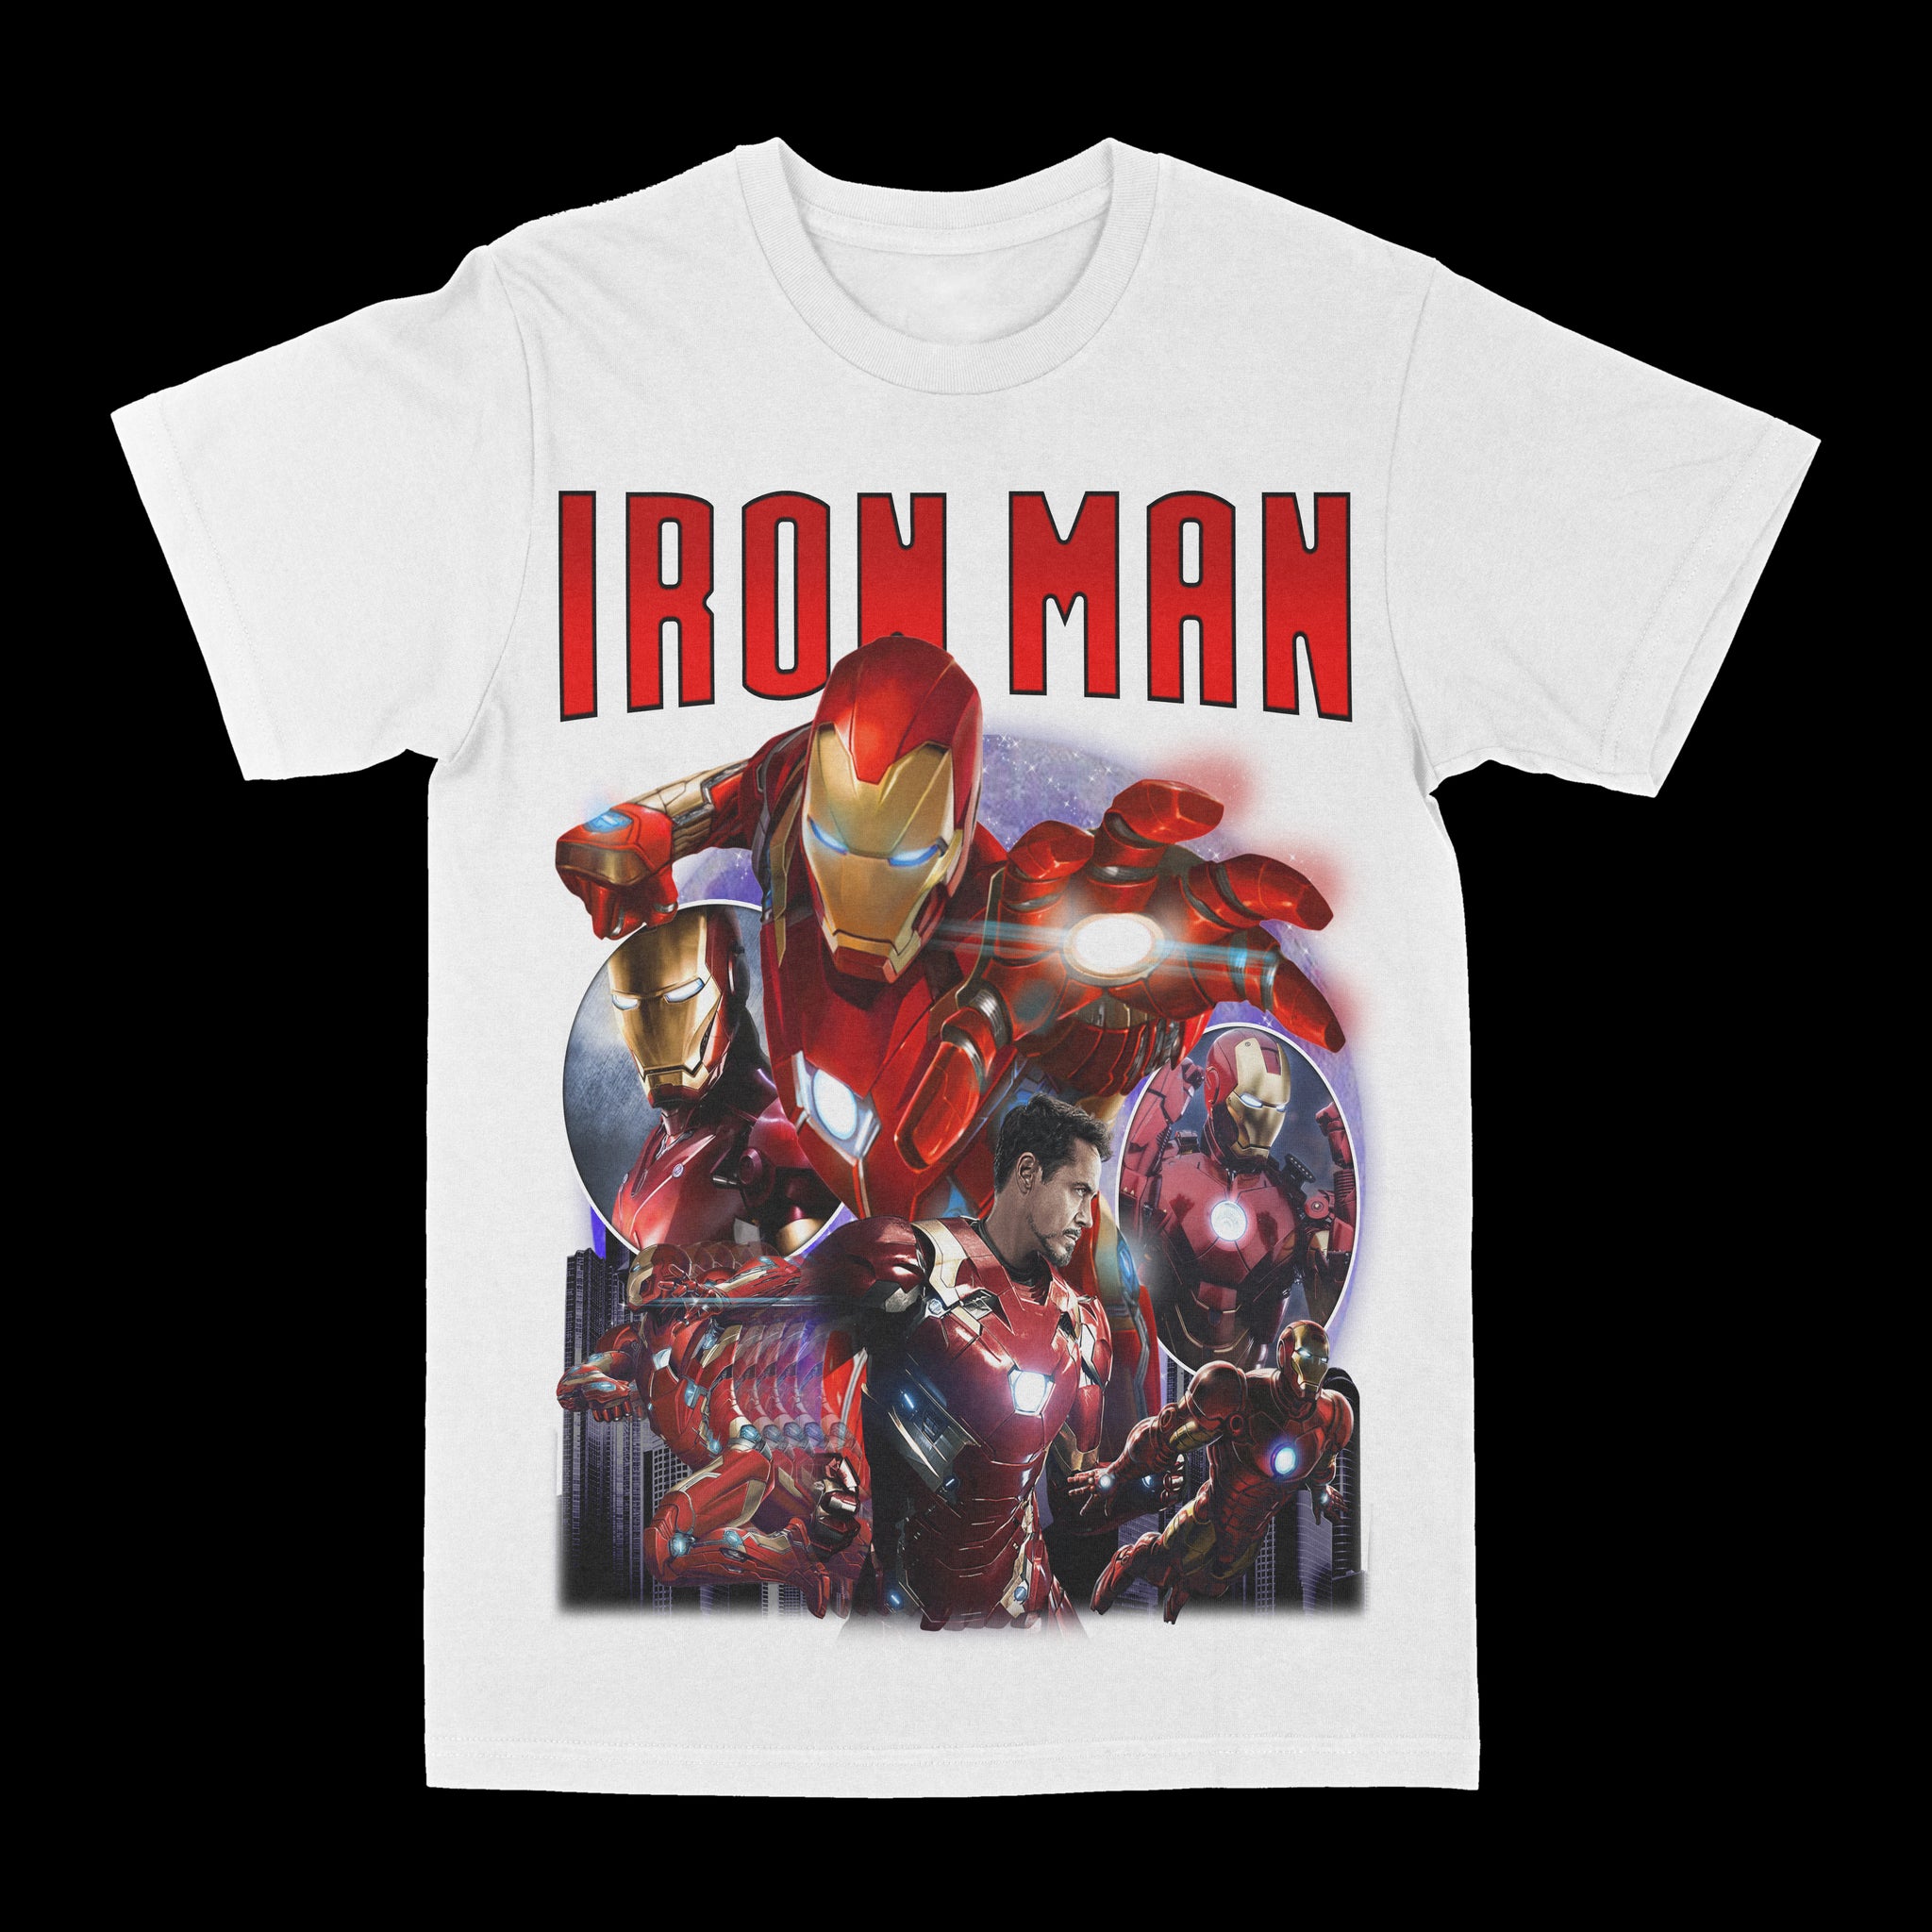 Iron Man "Tony Stark" Graphic Tee